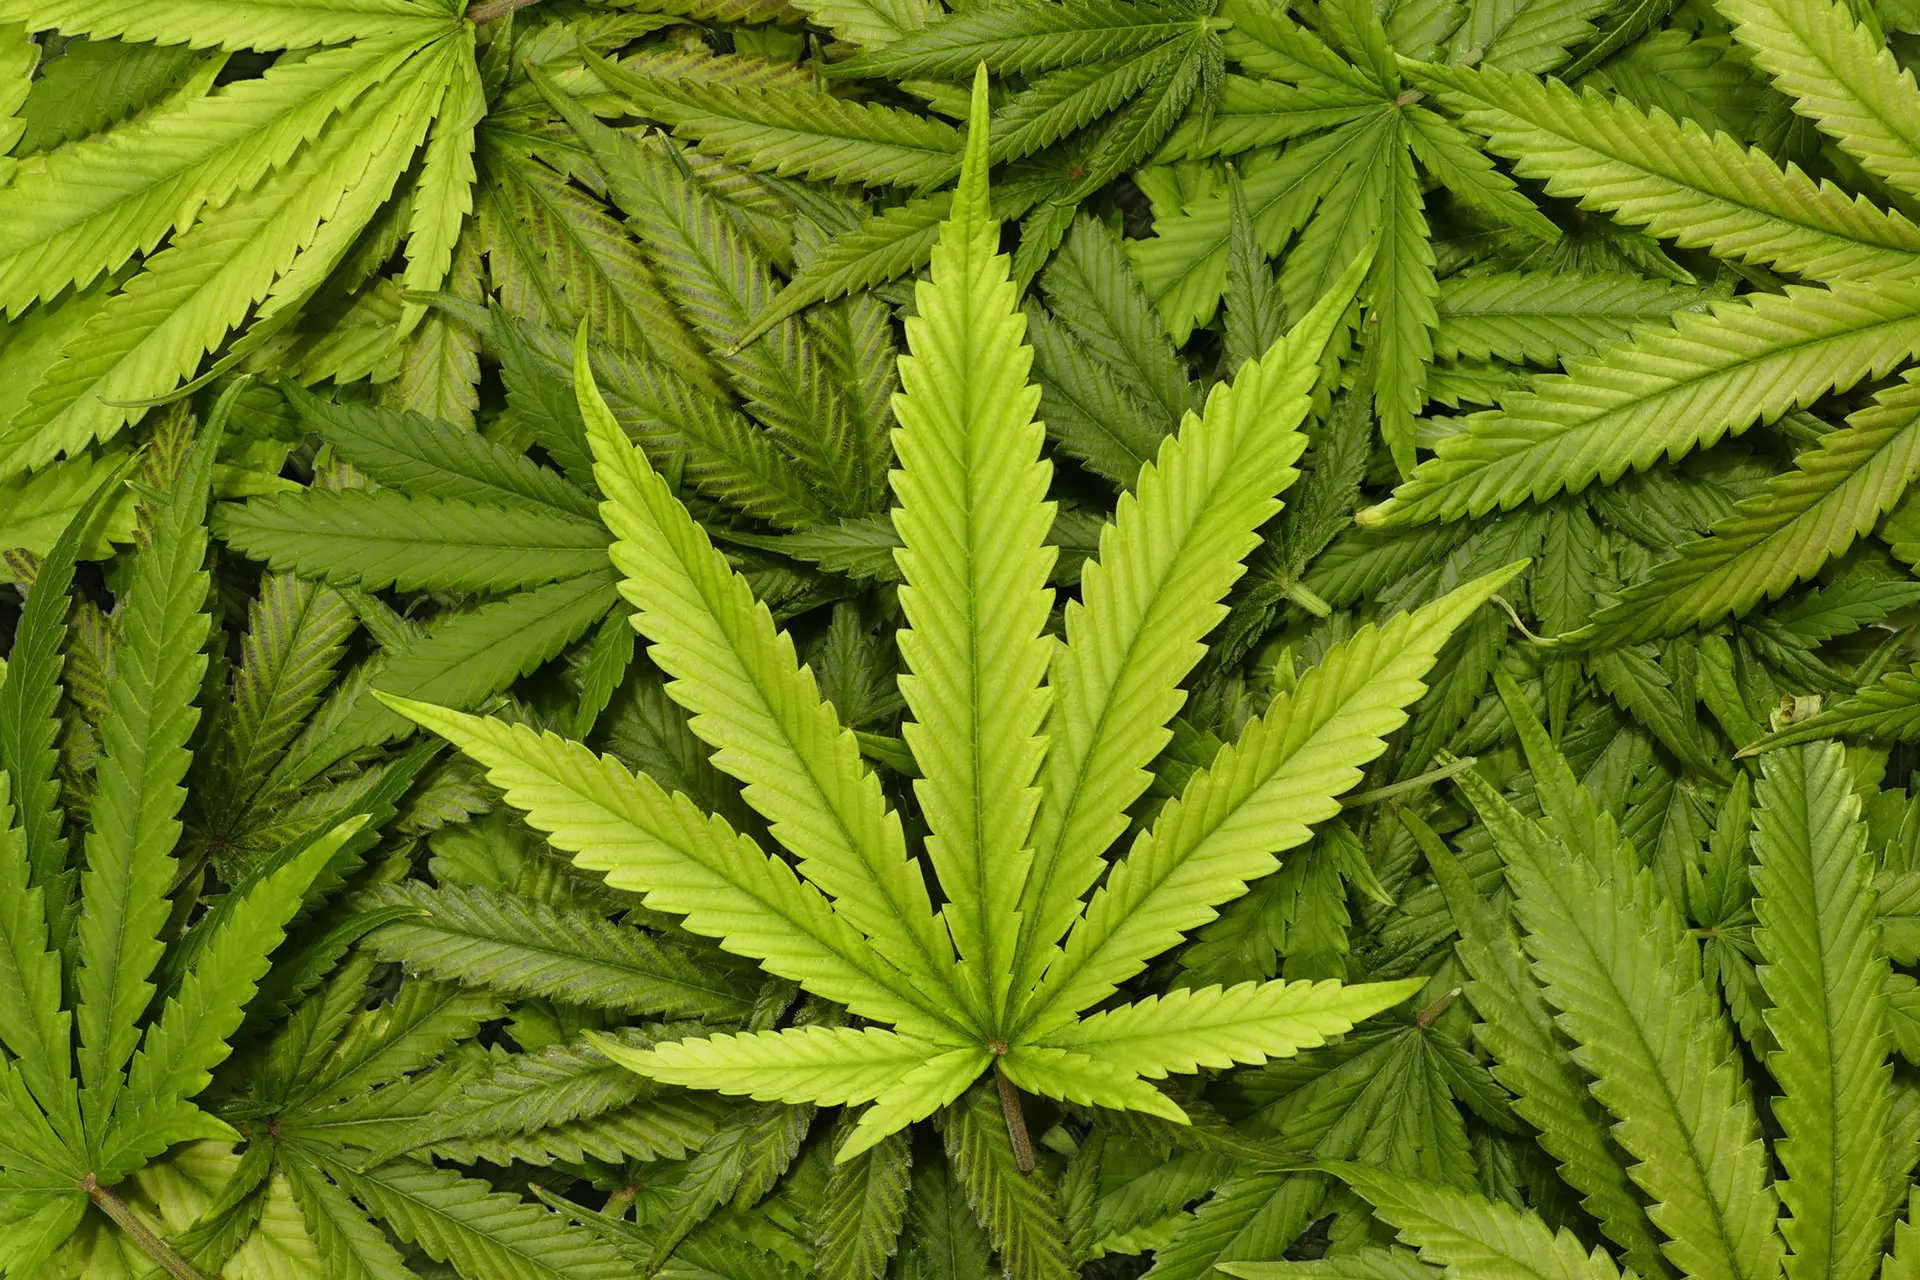 Marijuana Sector